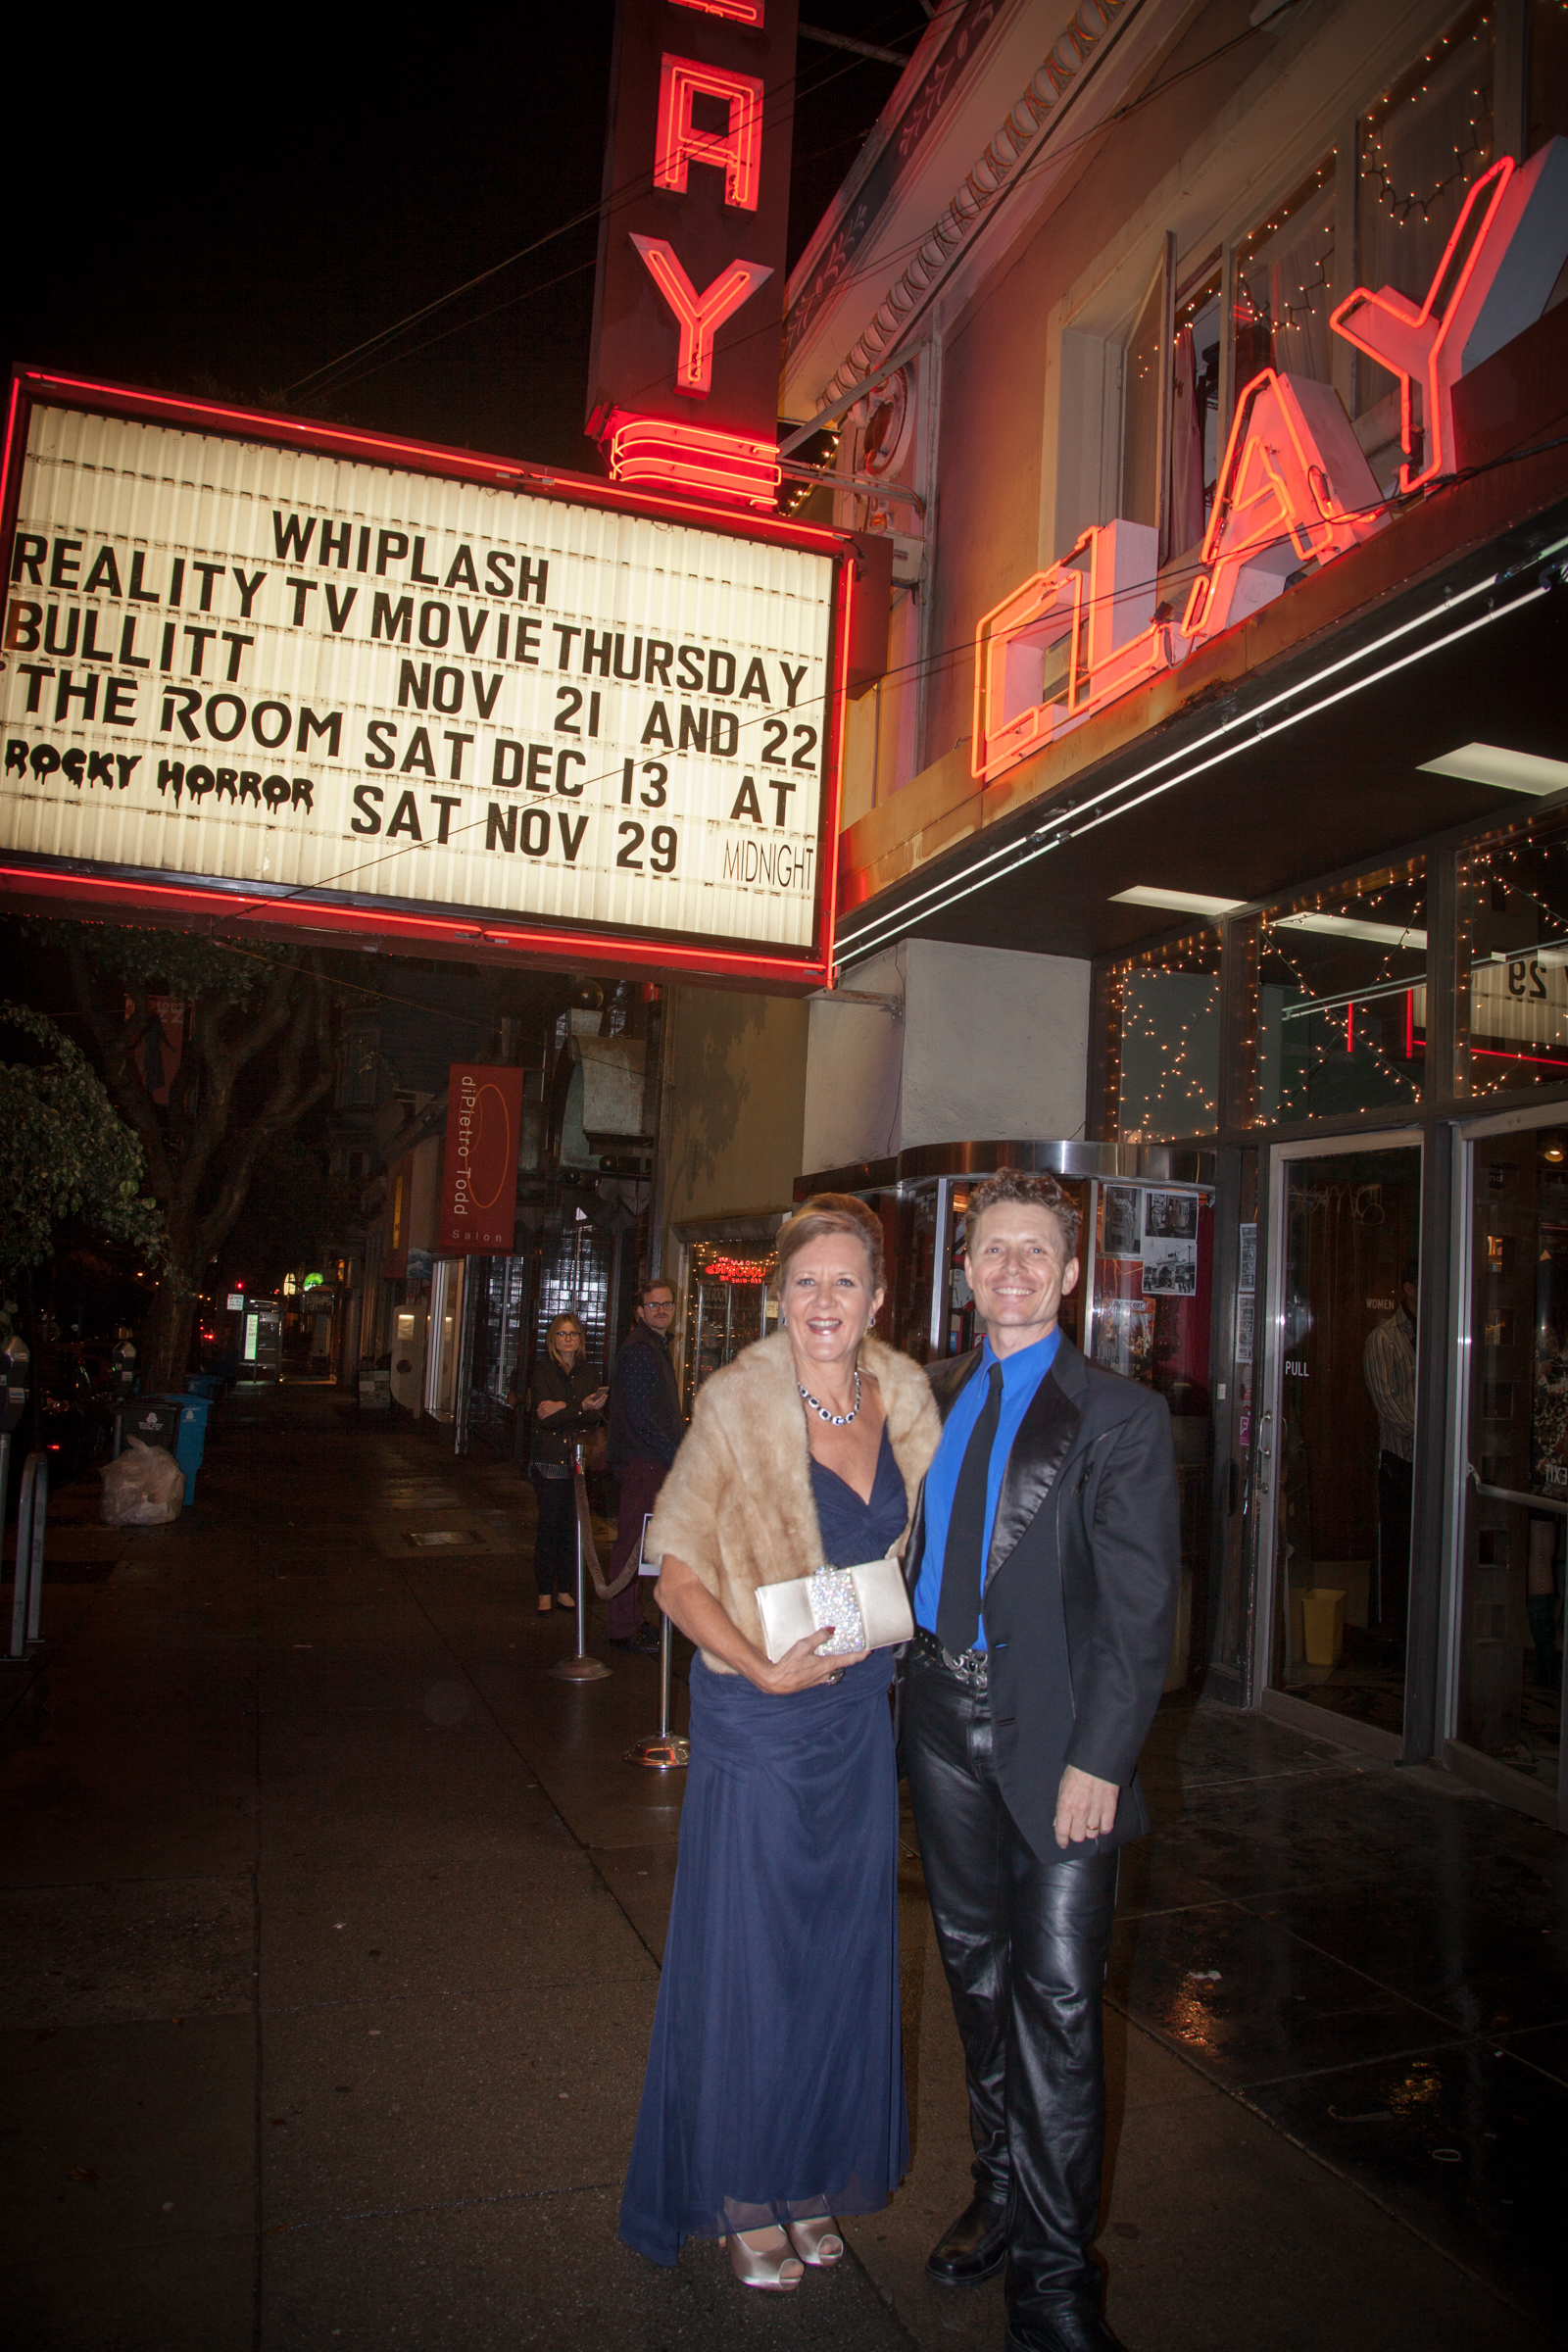 Suzette Stiles Slaughter and Tytus Bergstrom at the Reality TV Movie San Francisco premiere, Nov 20, 2014.